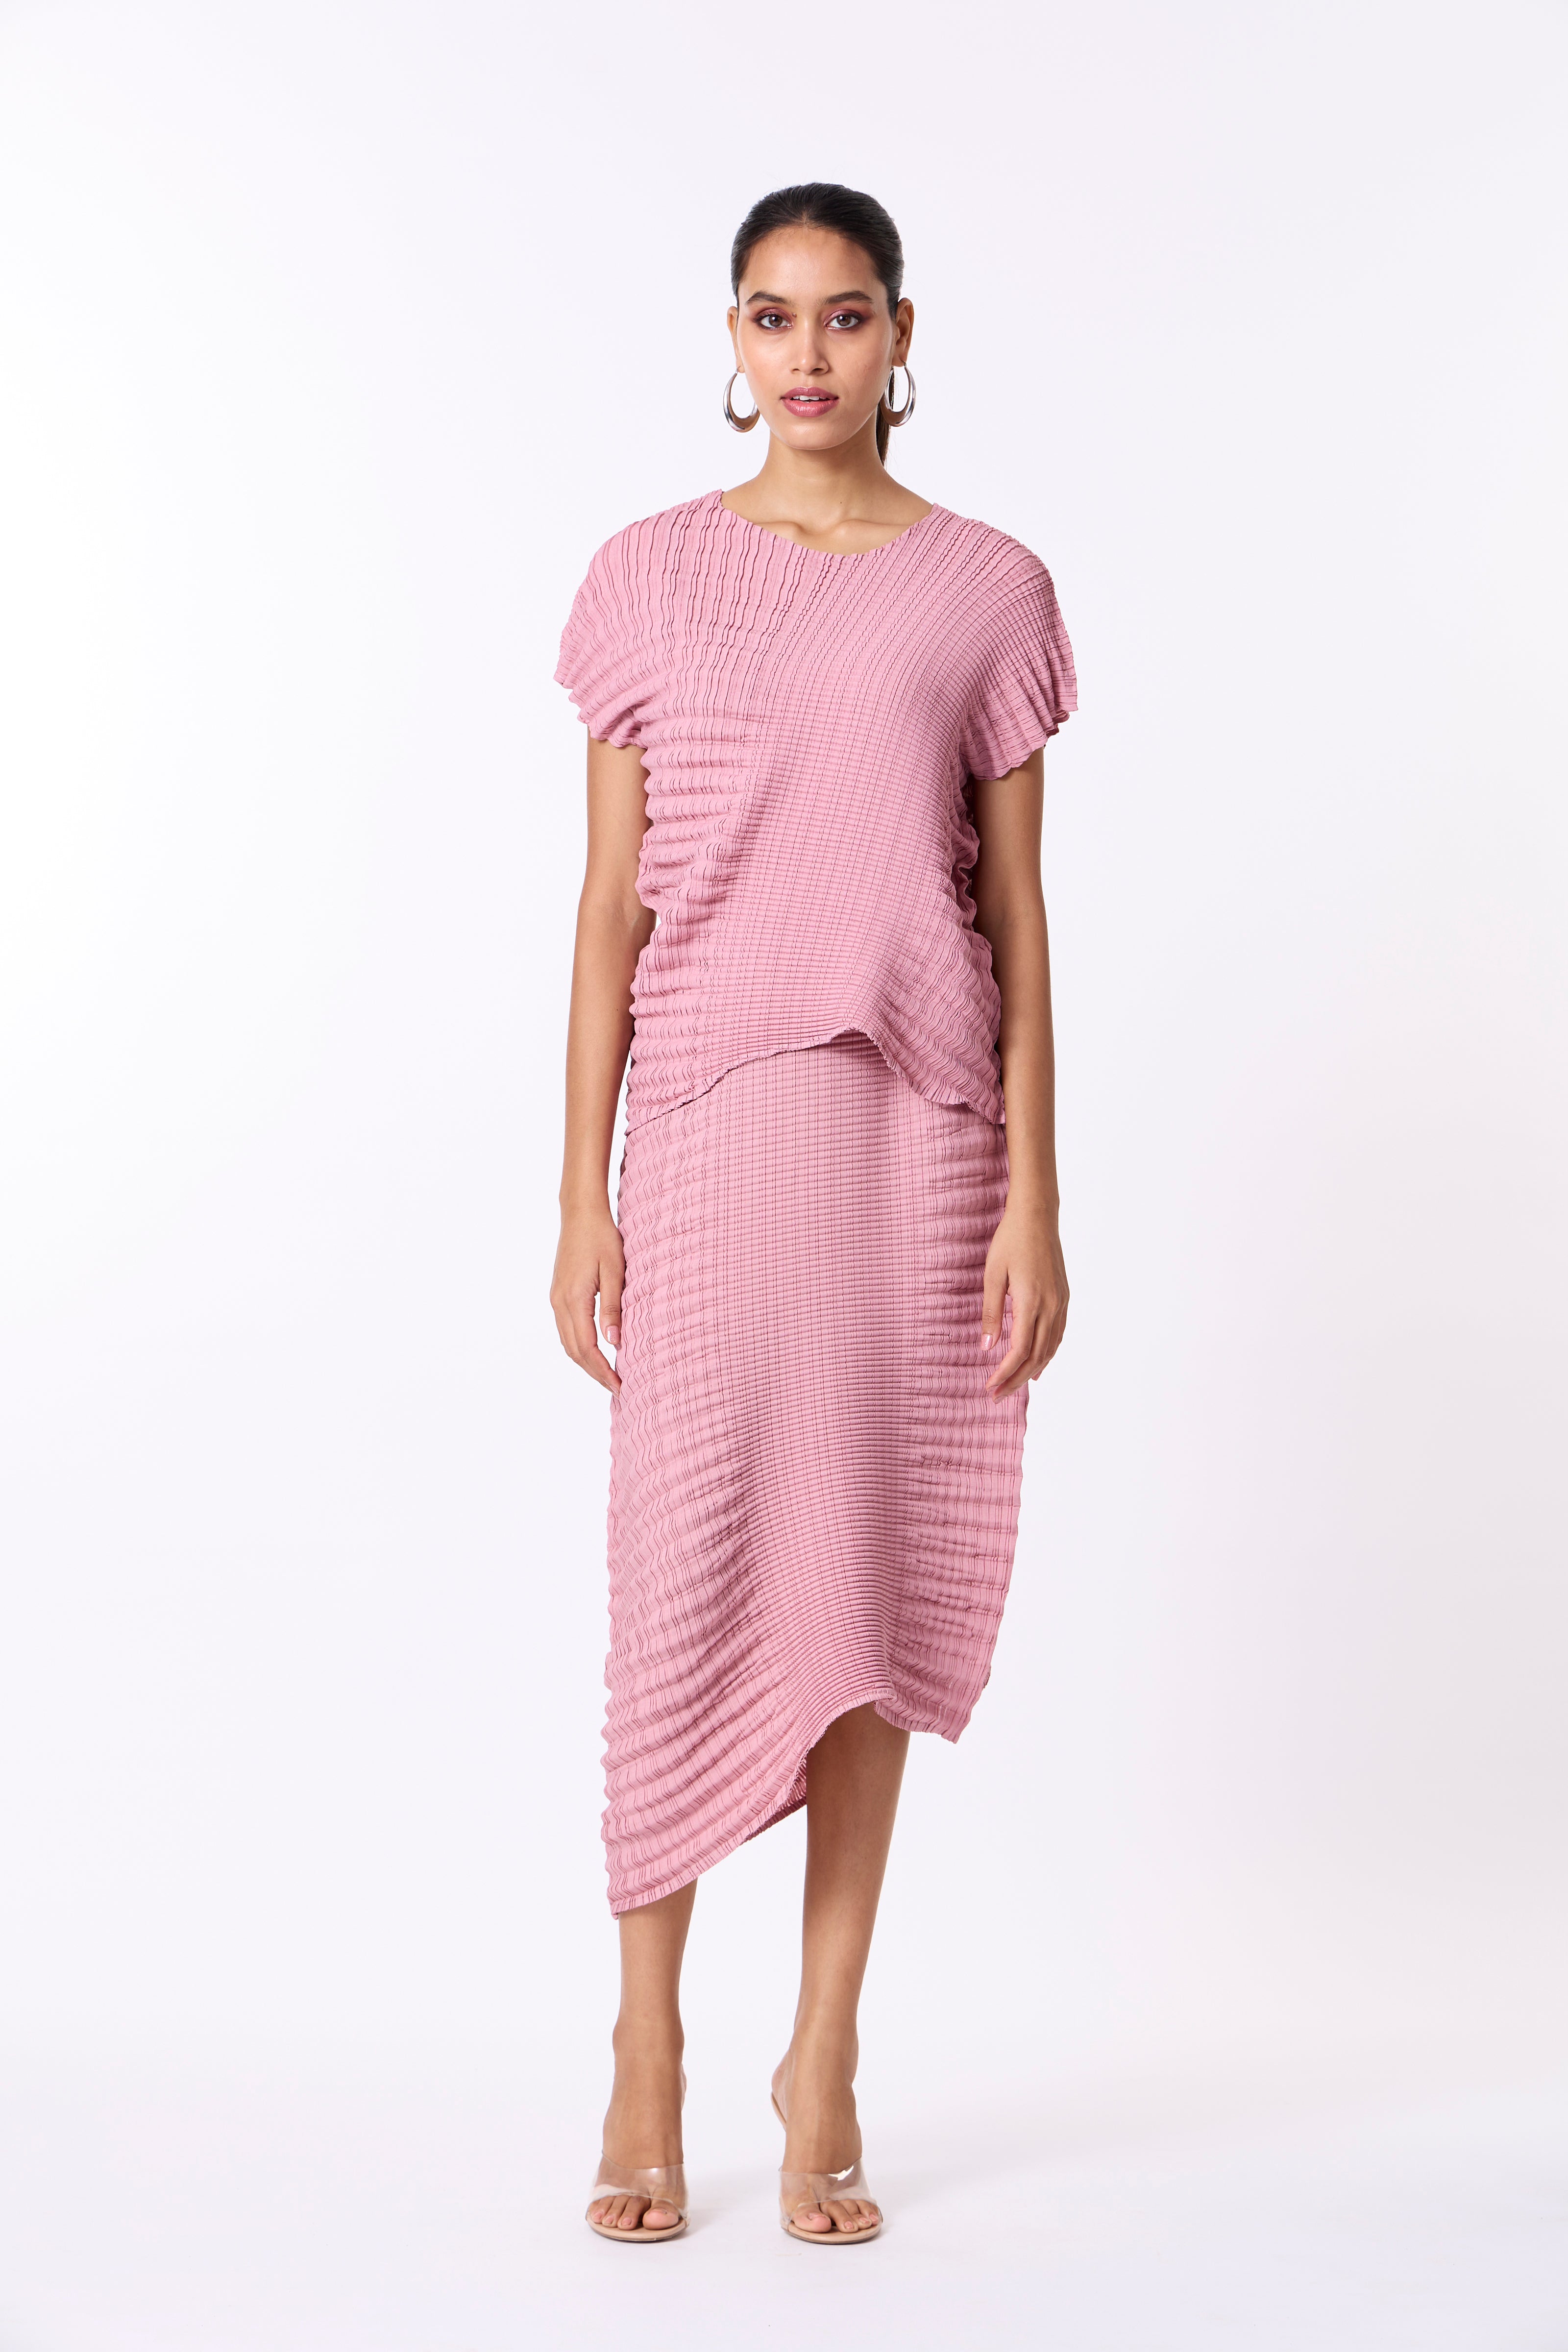 Aspen Skirt Set - Pink